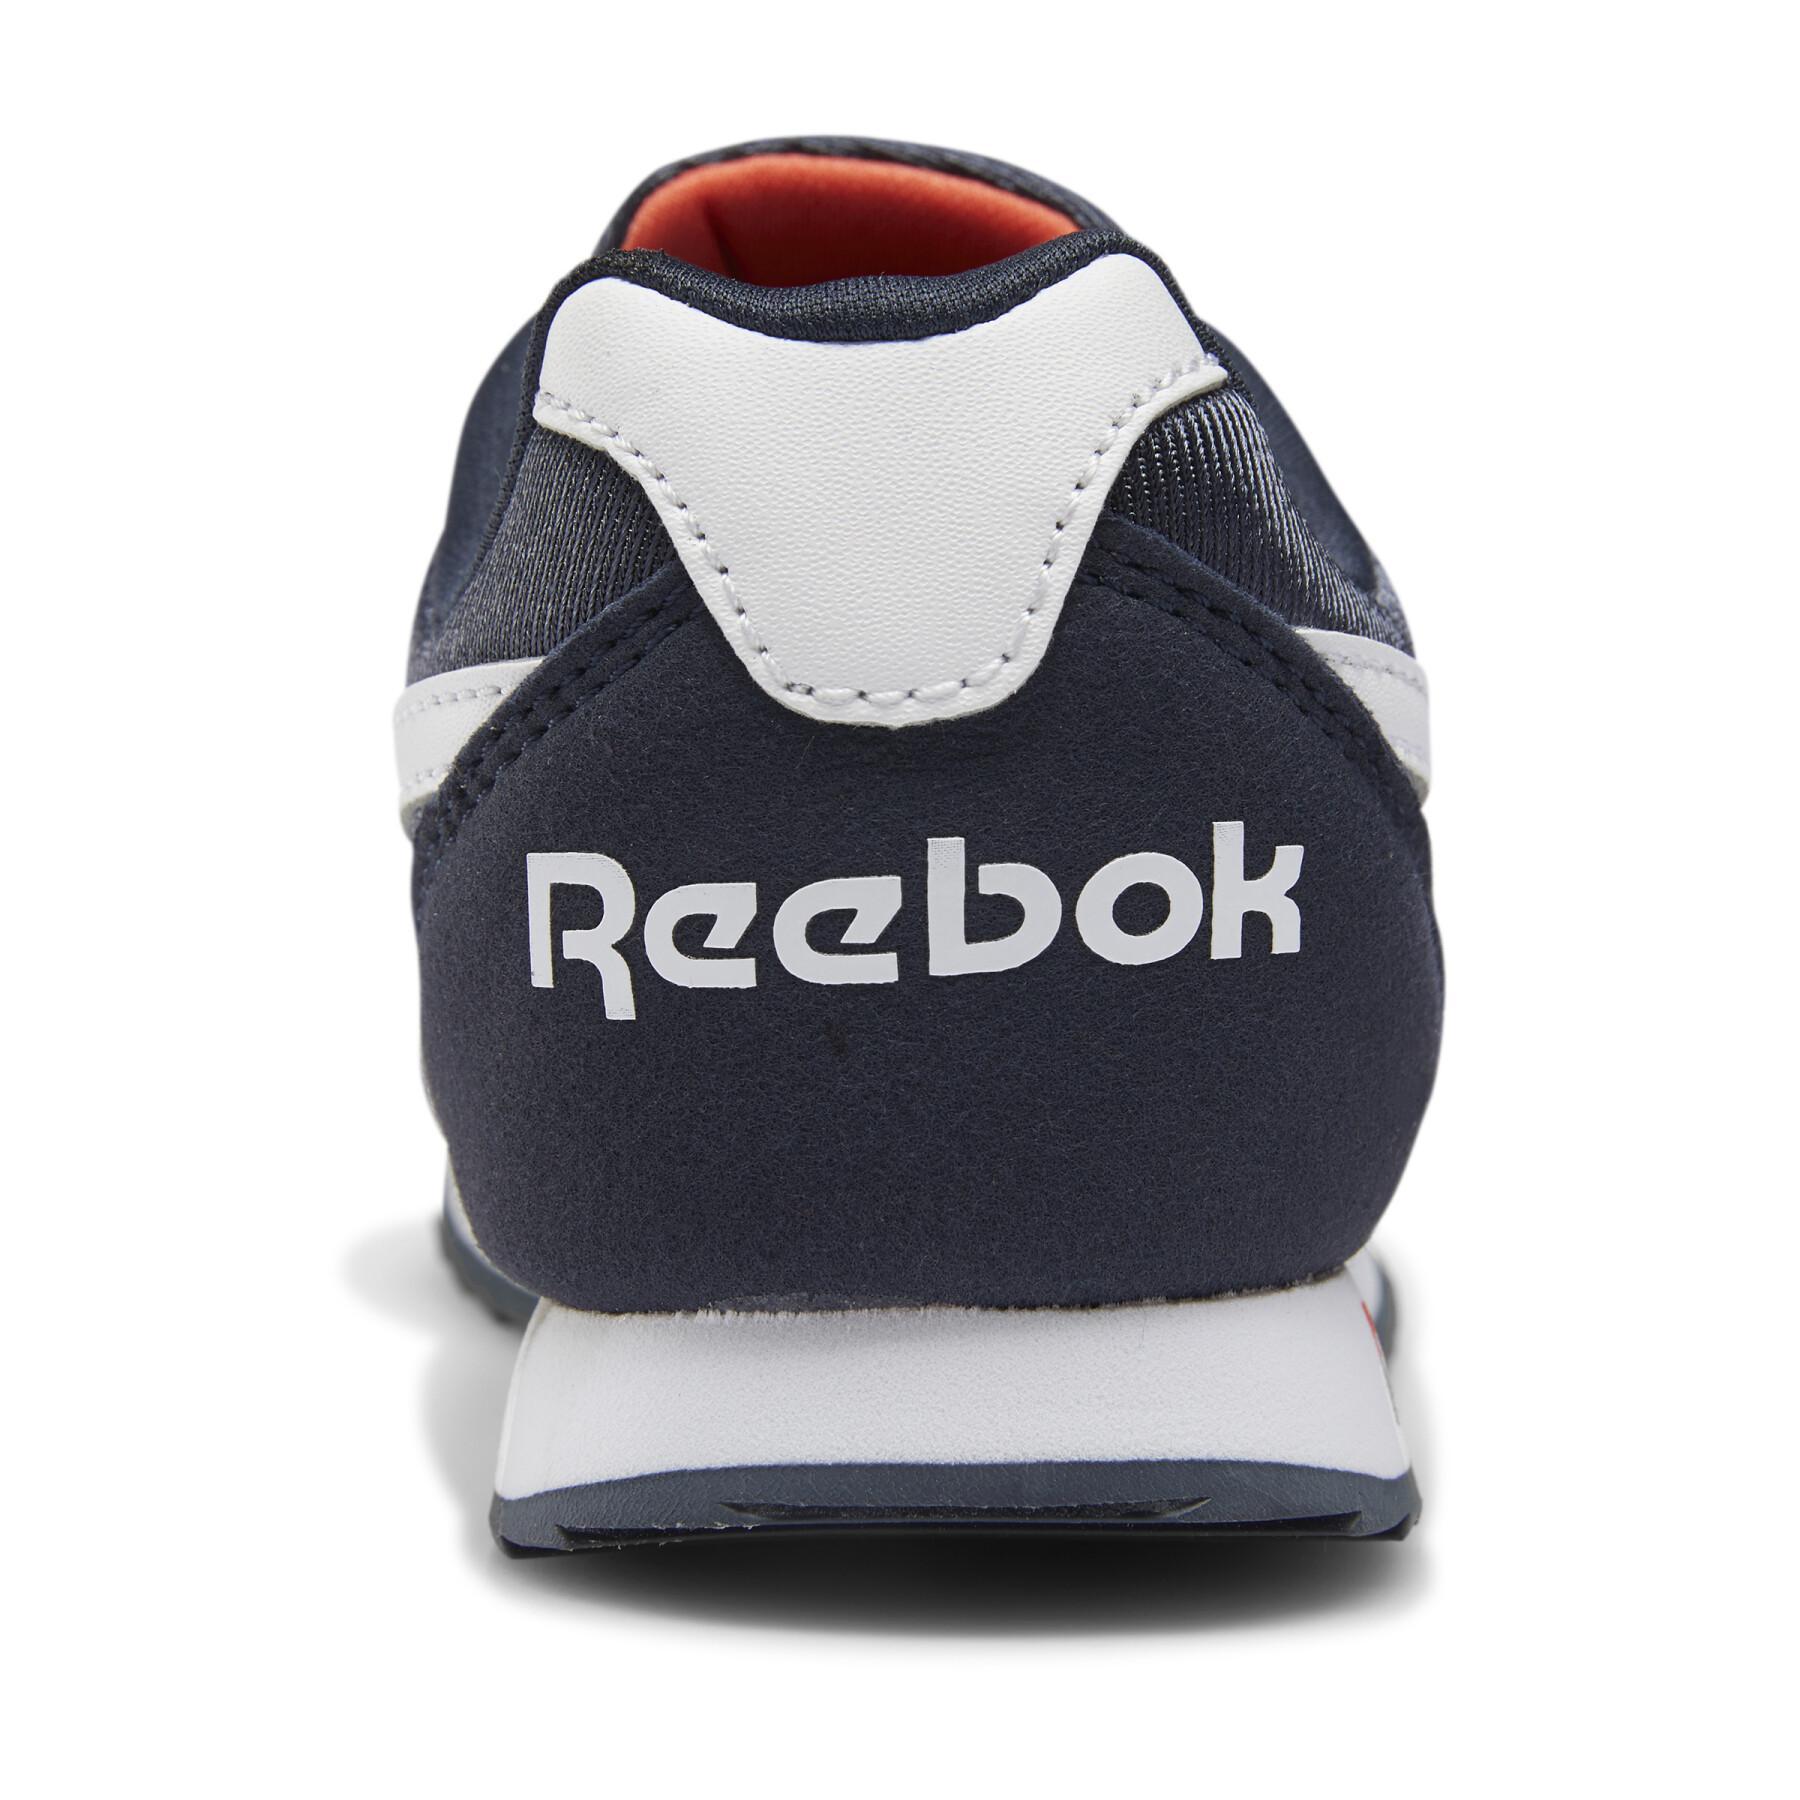 Kid sneakers Reebok Royal Jogger 2.0